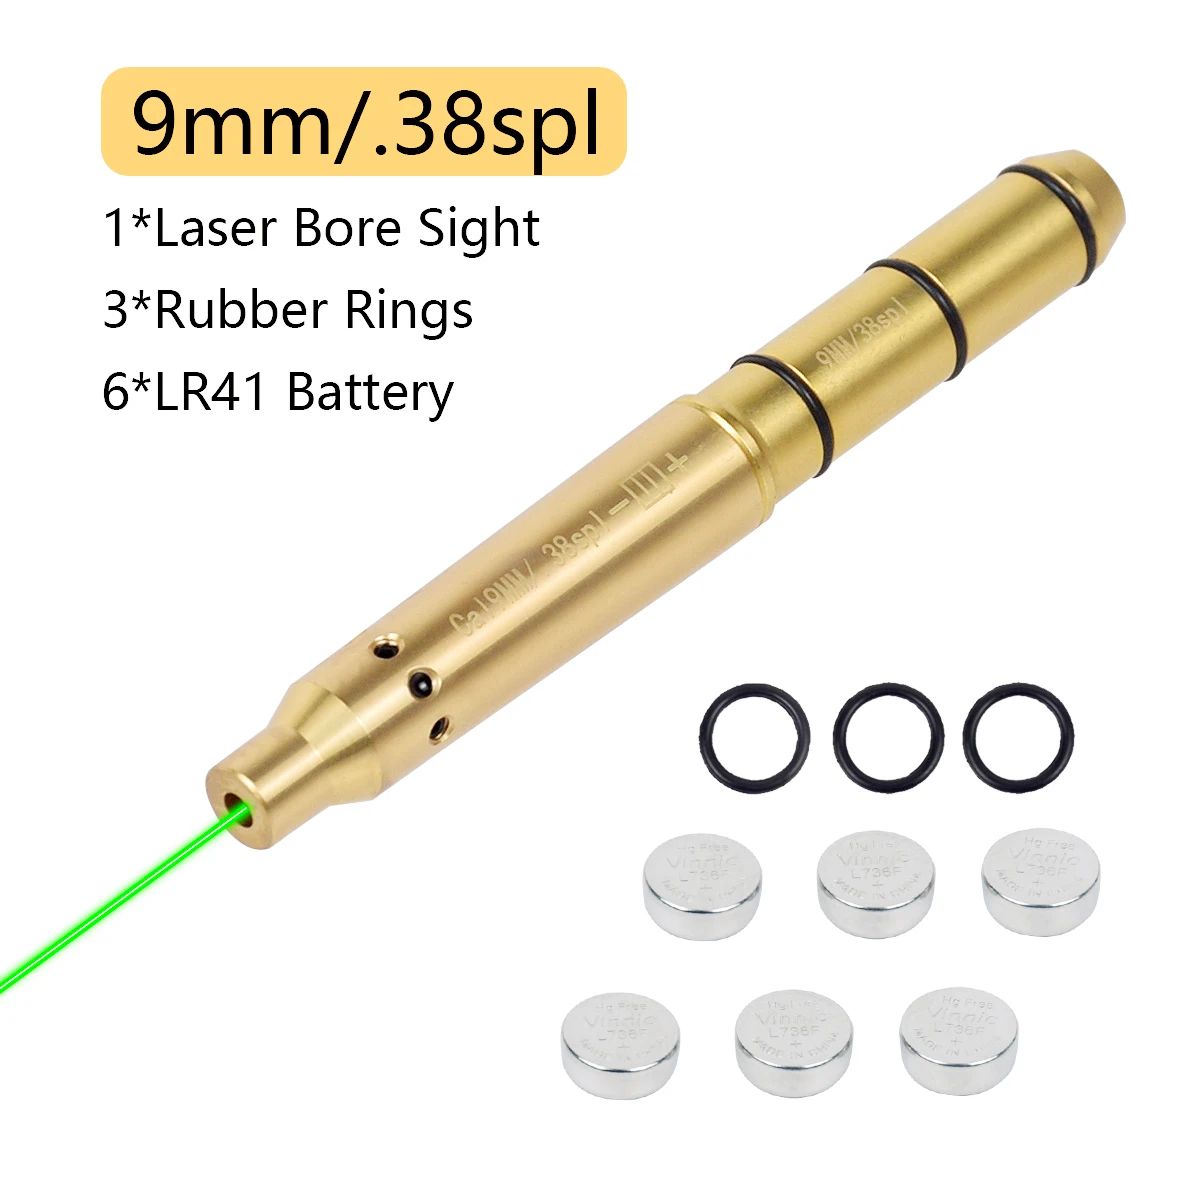 Laser verde .38SPL da 9mm